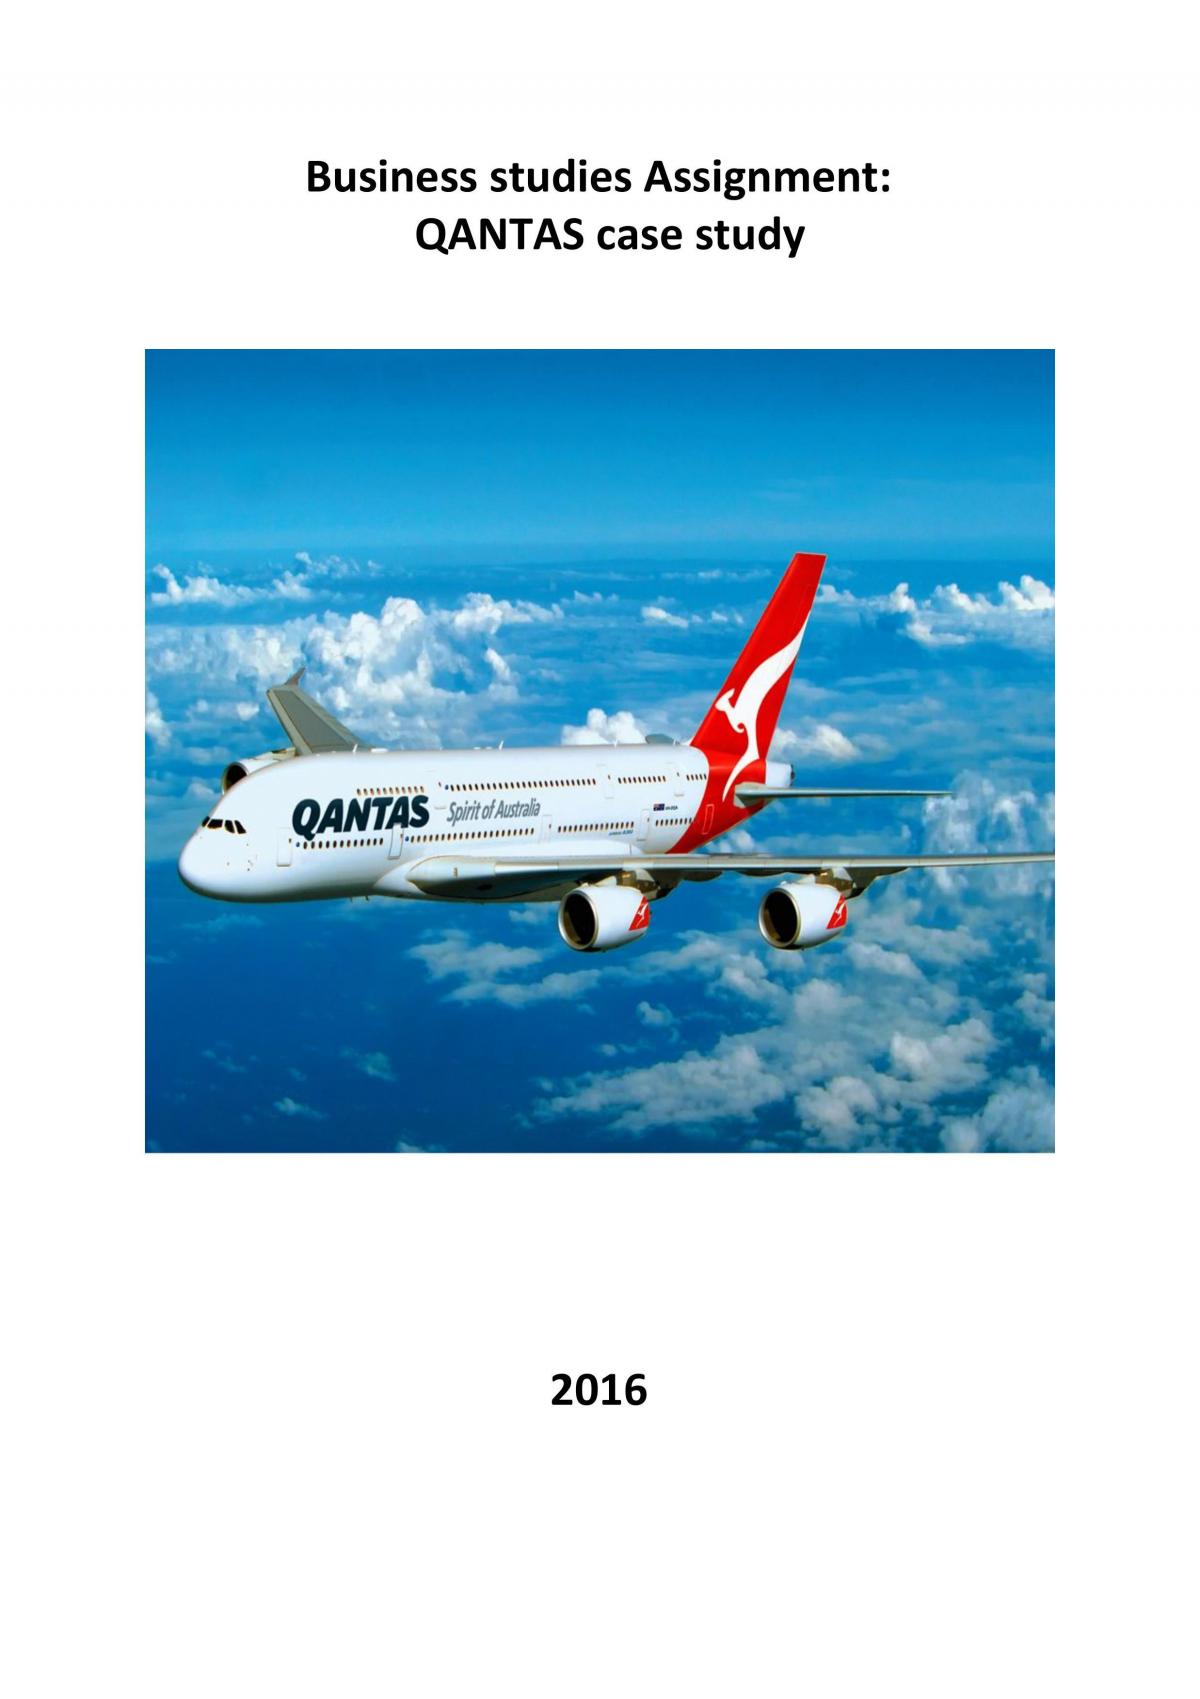 qantas case study business studies marketing